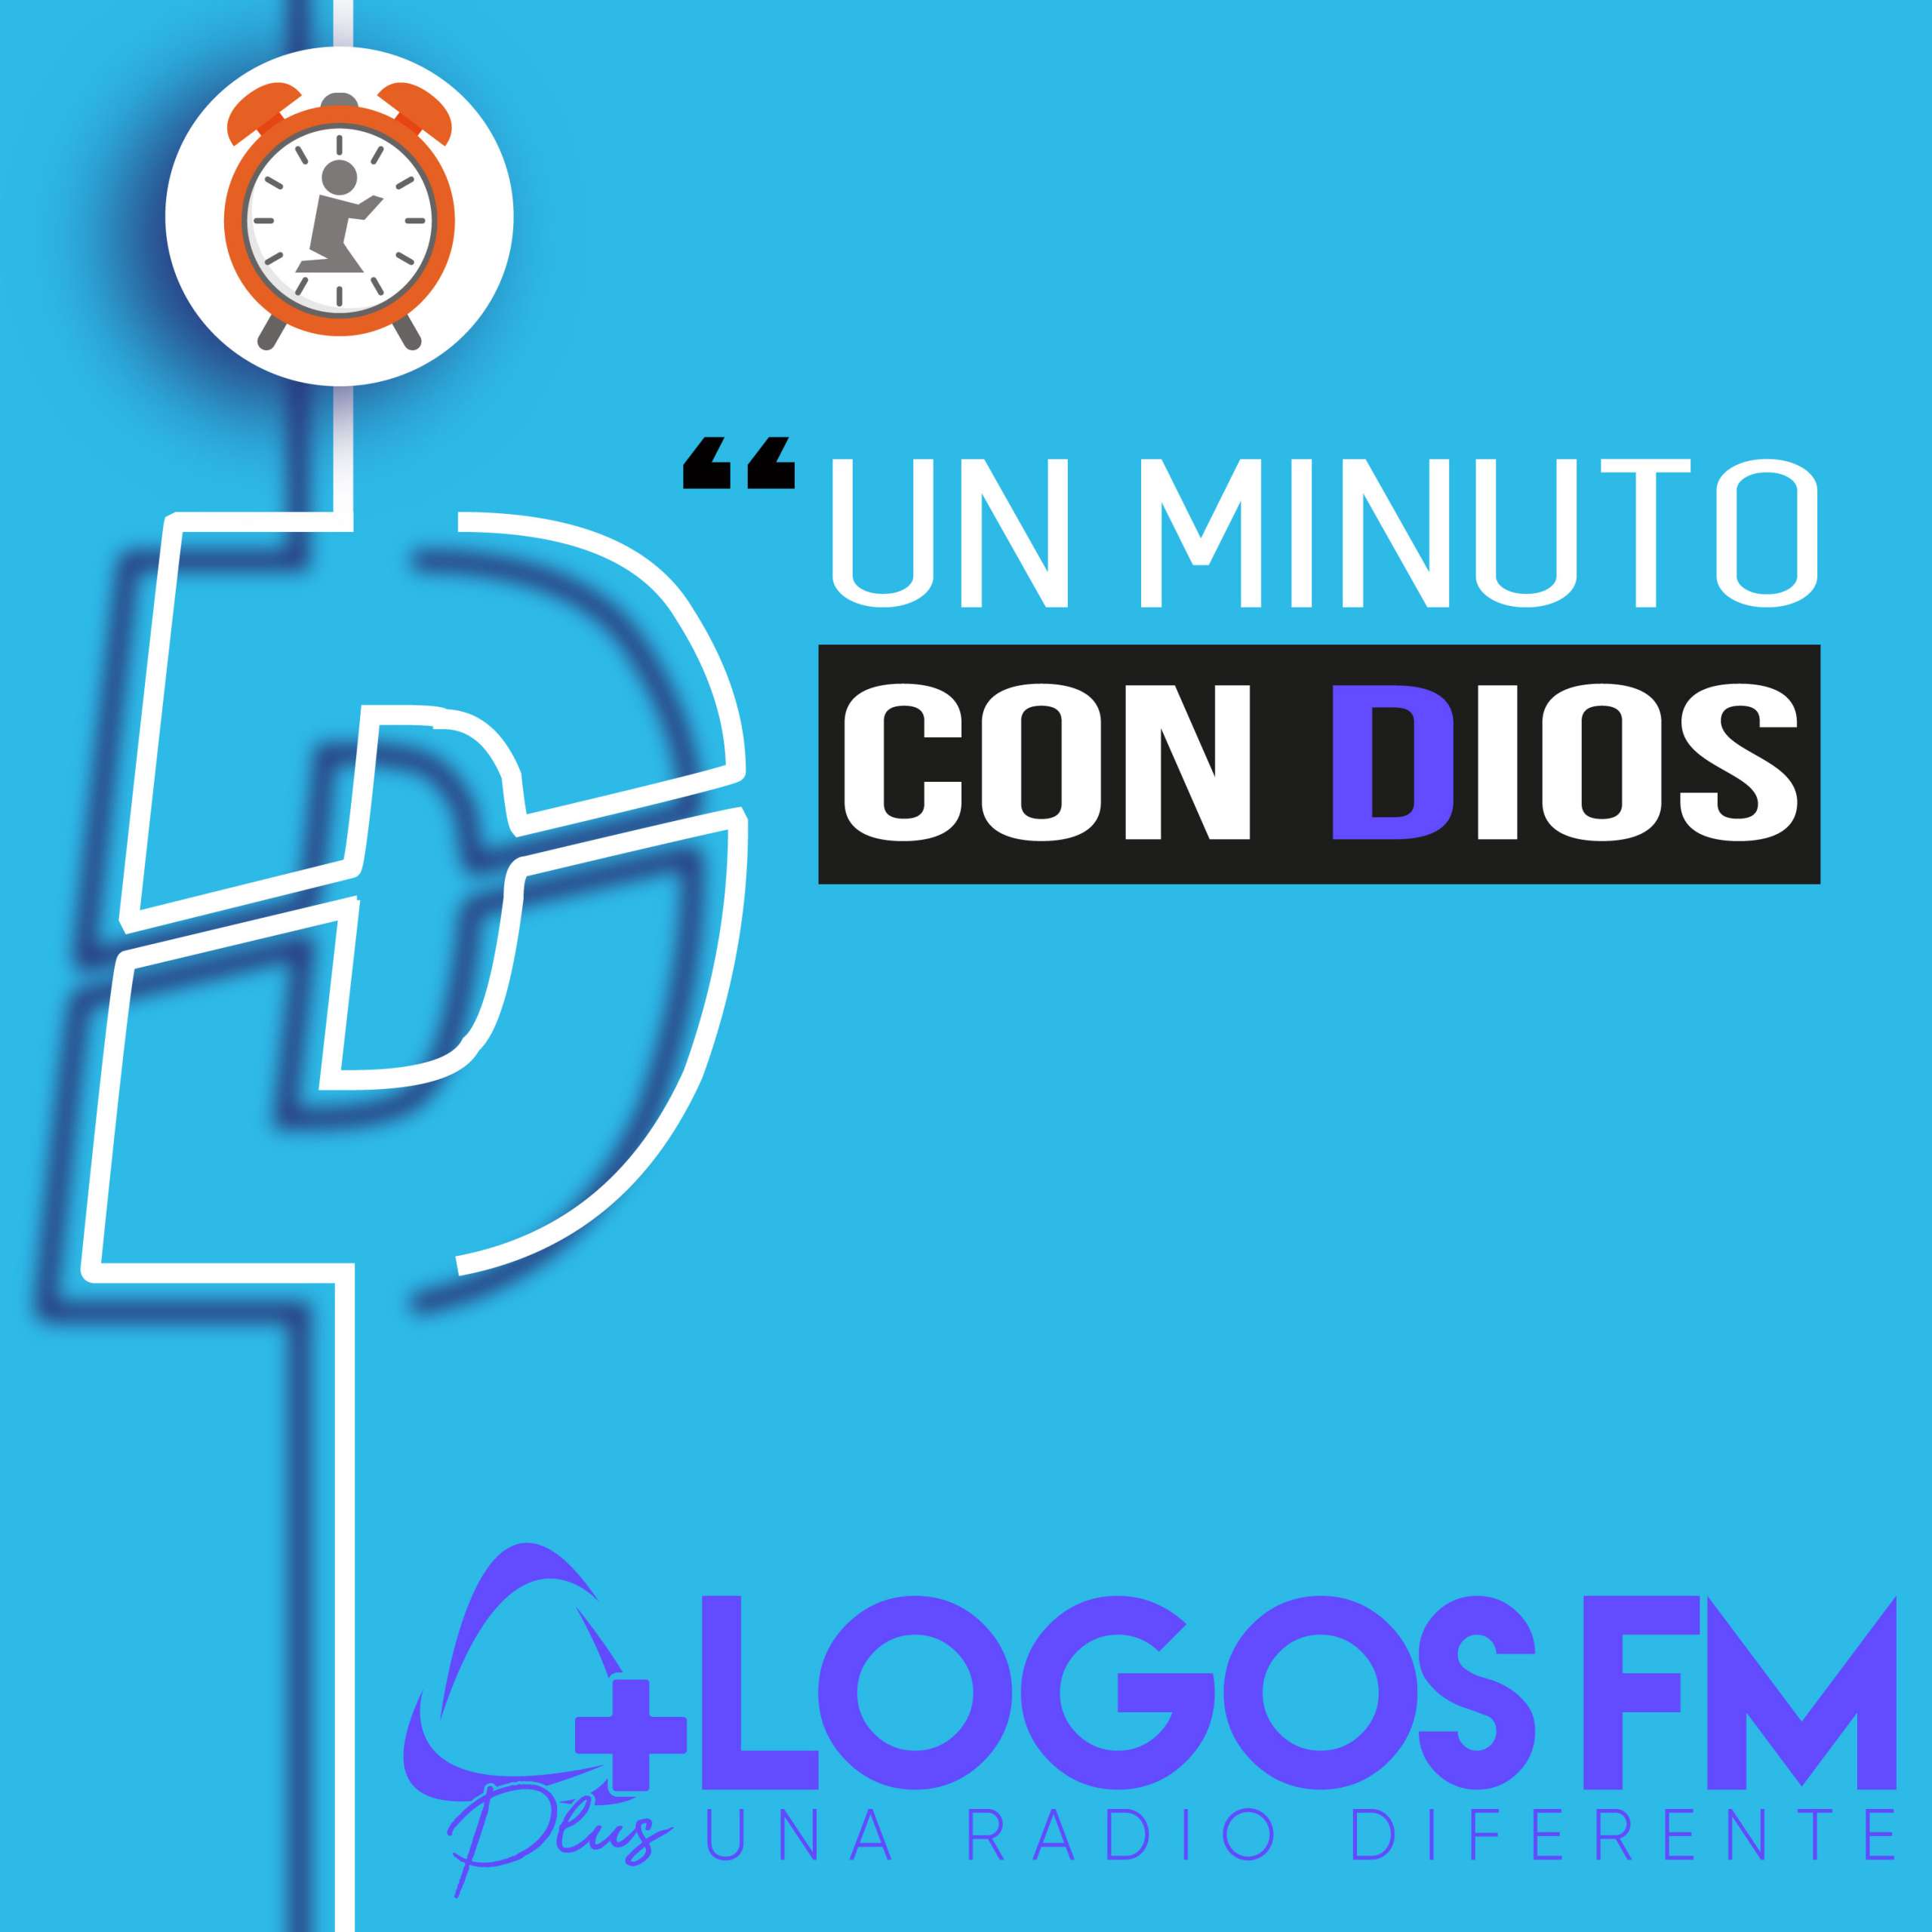 Un minuto con Dios - Episodio 375 - Loida Vargas